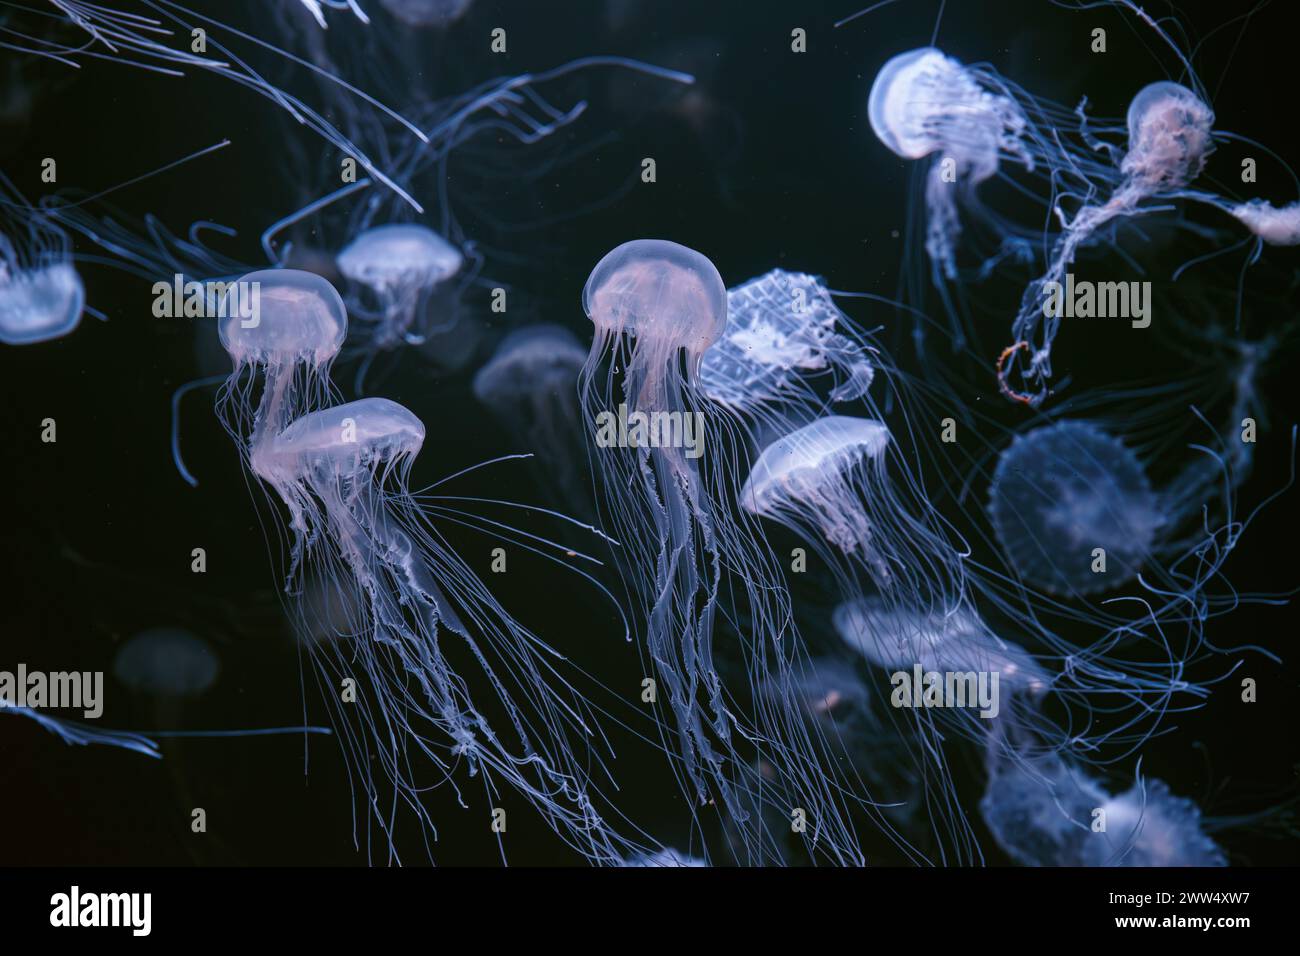 Atlantic sea nettle, Chrysaora quinquecirrha, East Cost sea nettle. Group of fluorescent jellyfish floating in illuminated aquarium. Theriology, biodi Stock Photo